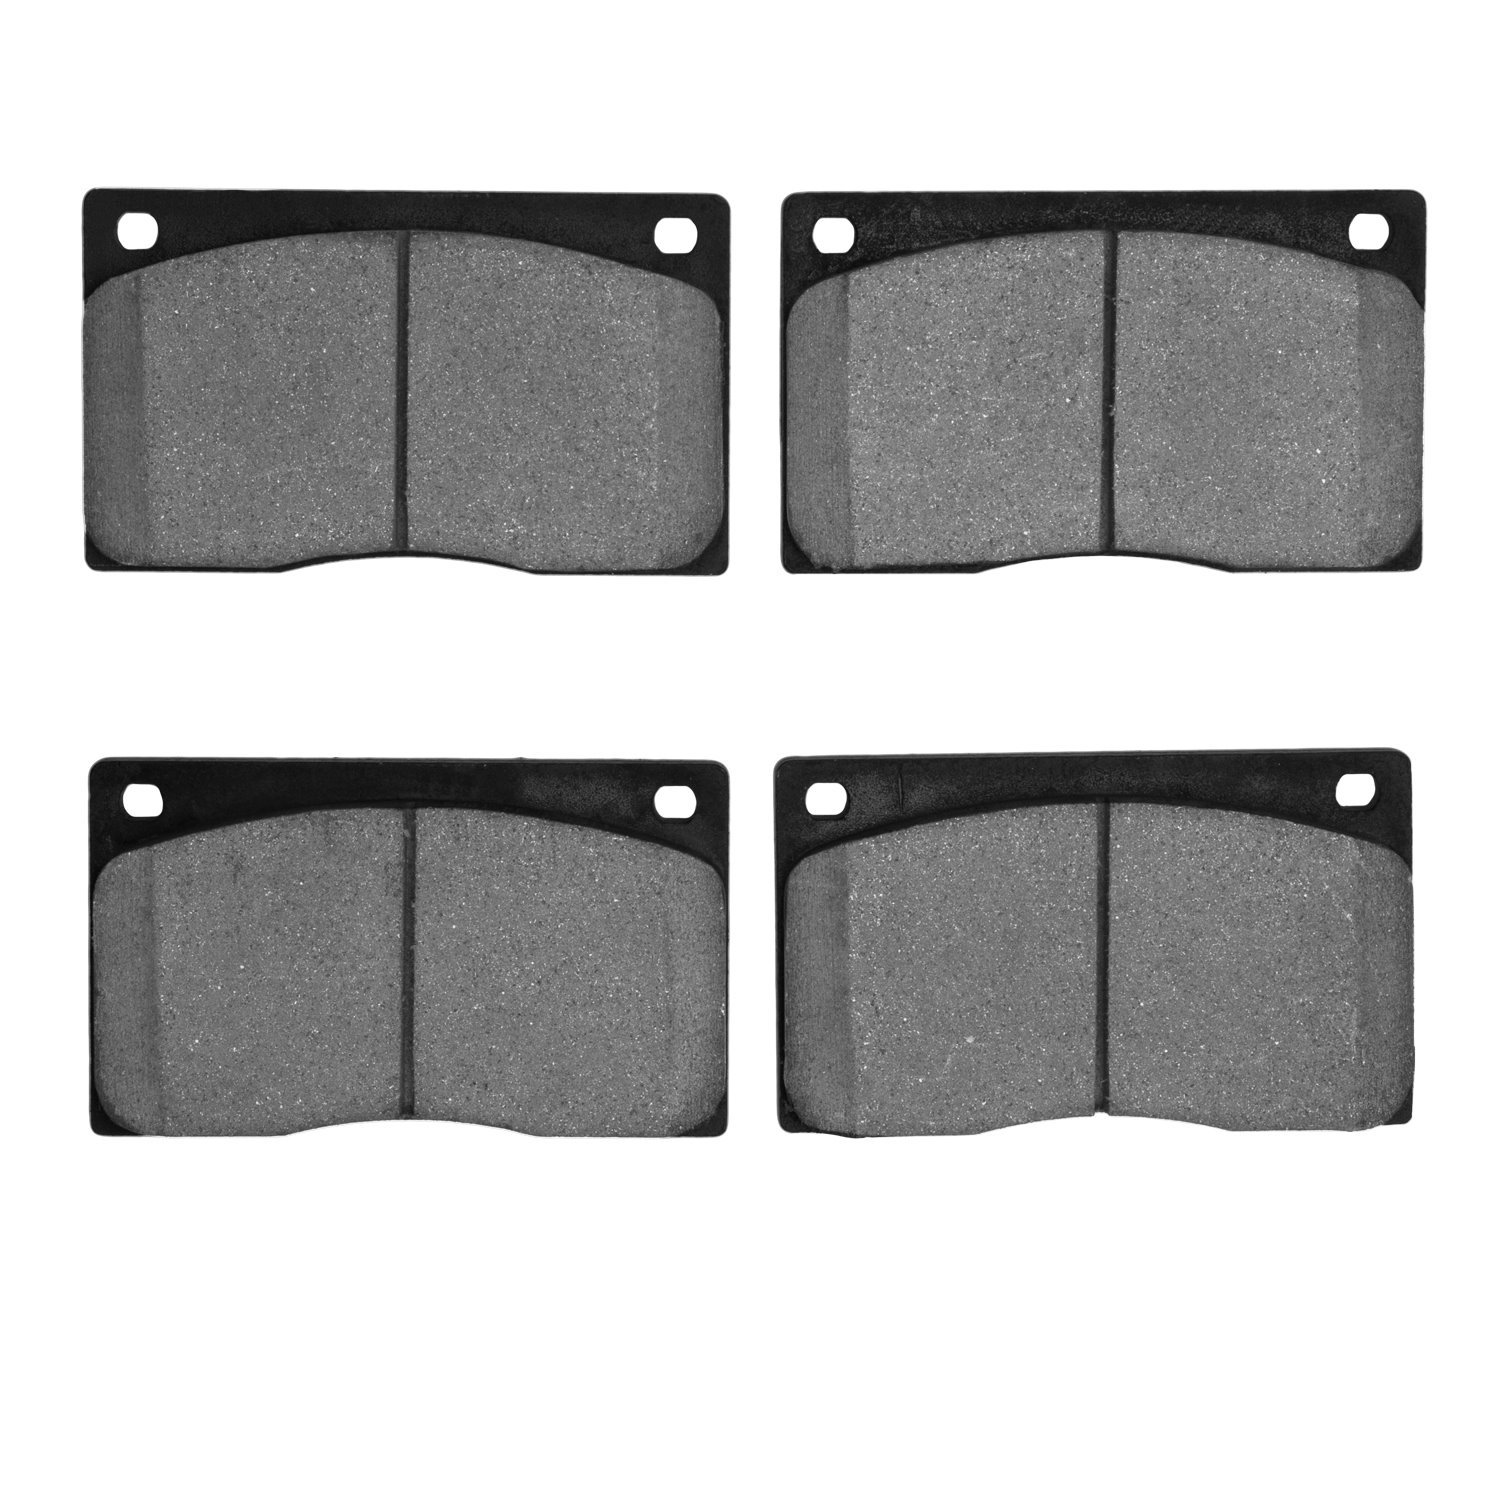 1310-0135-00 3000-Series Ceramic Brake Pads, 1973-2004 Multiple Makes/Models, Position: Front